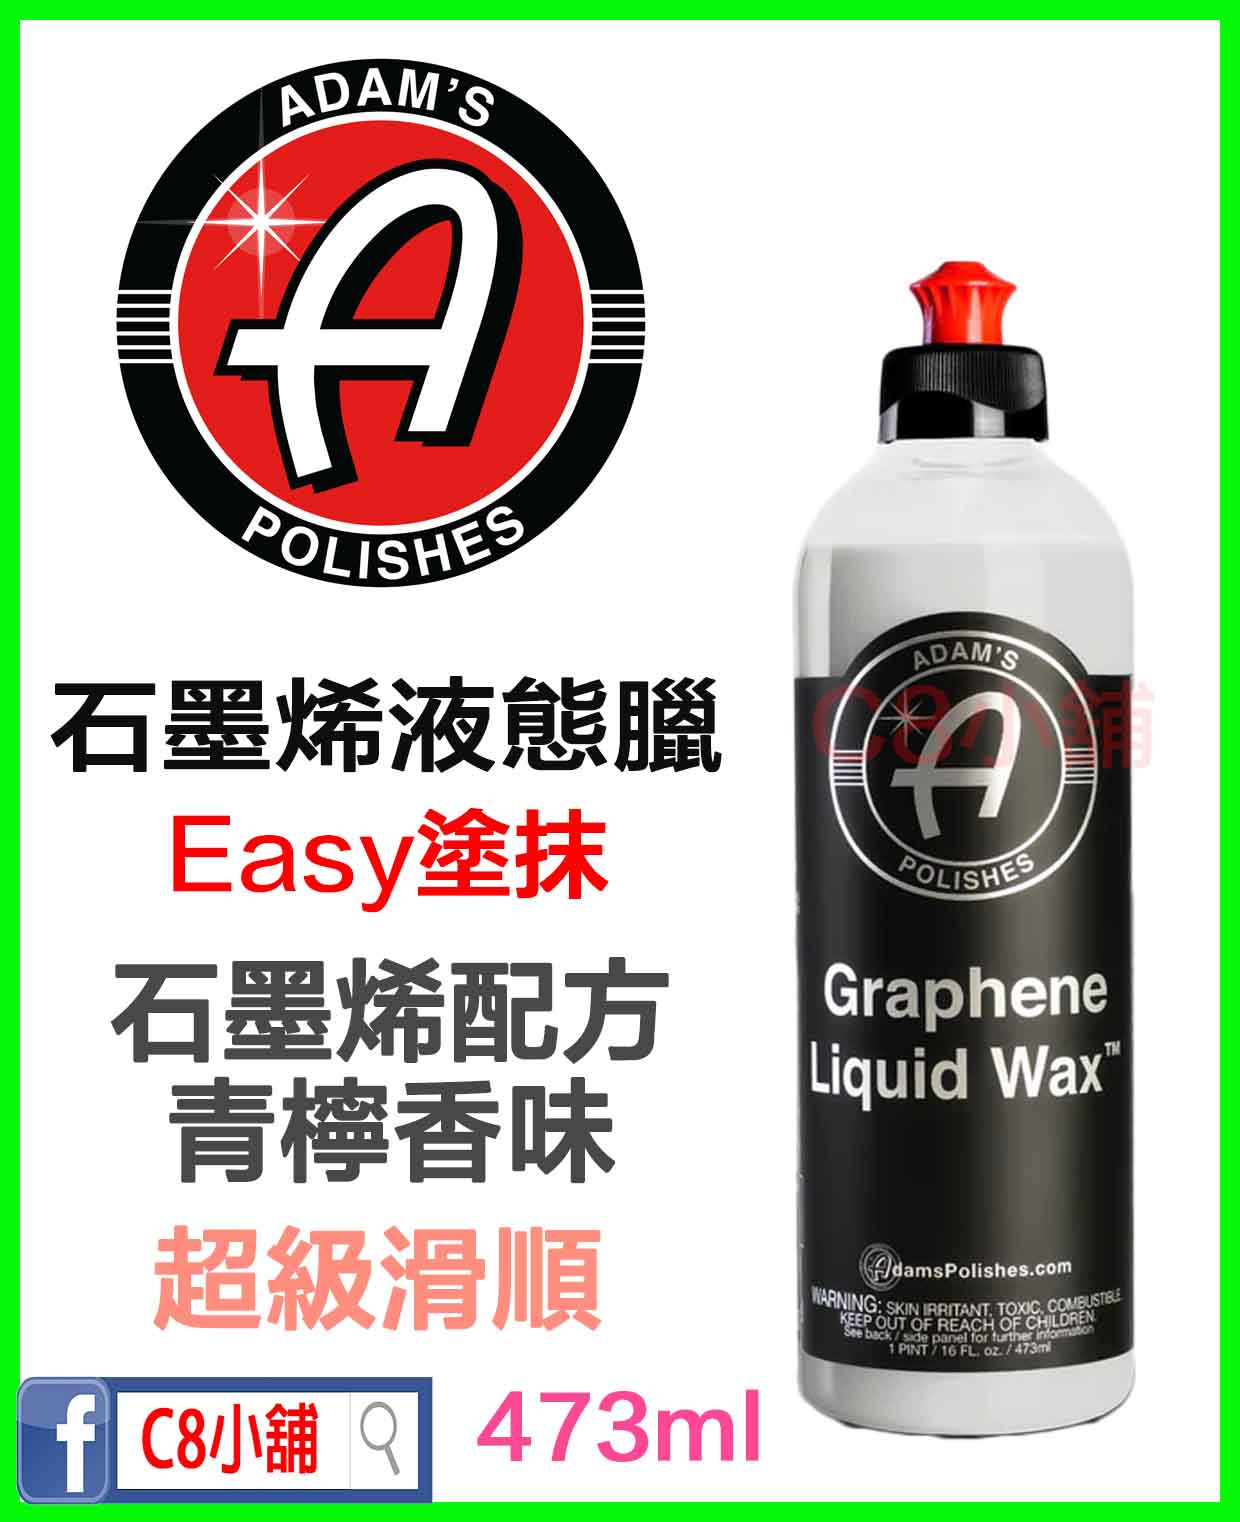 特價』亞當Adam's 石墨烯液態臘Graphene Liquid Wax 473ml